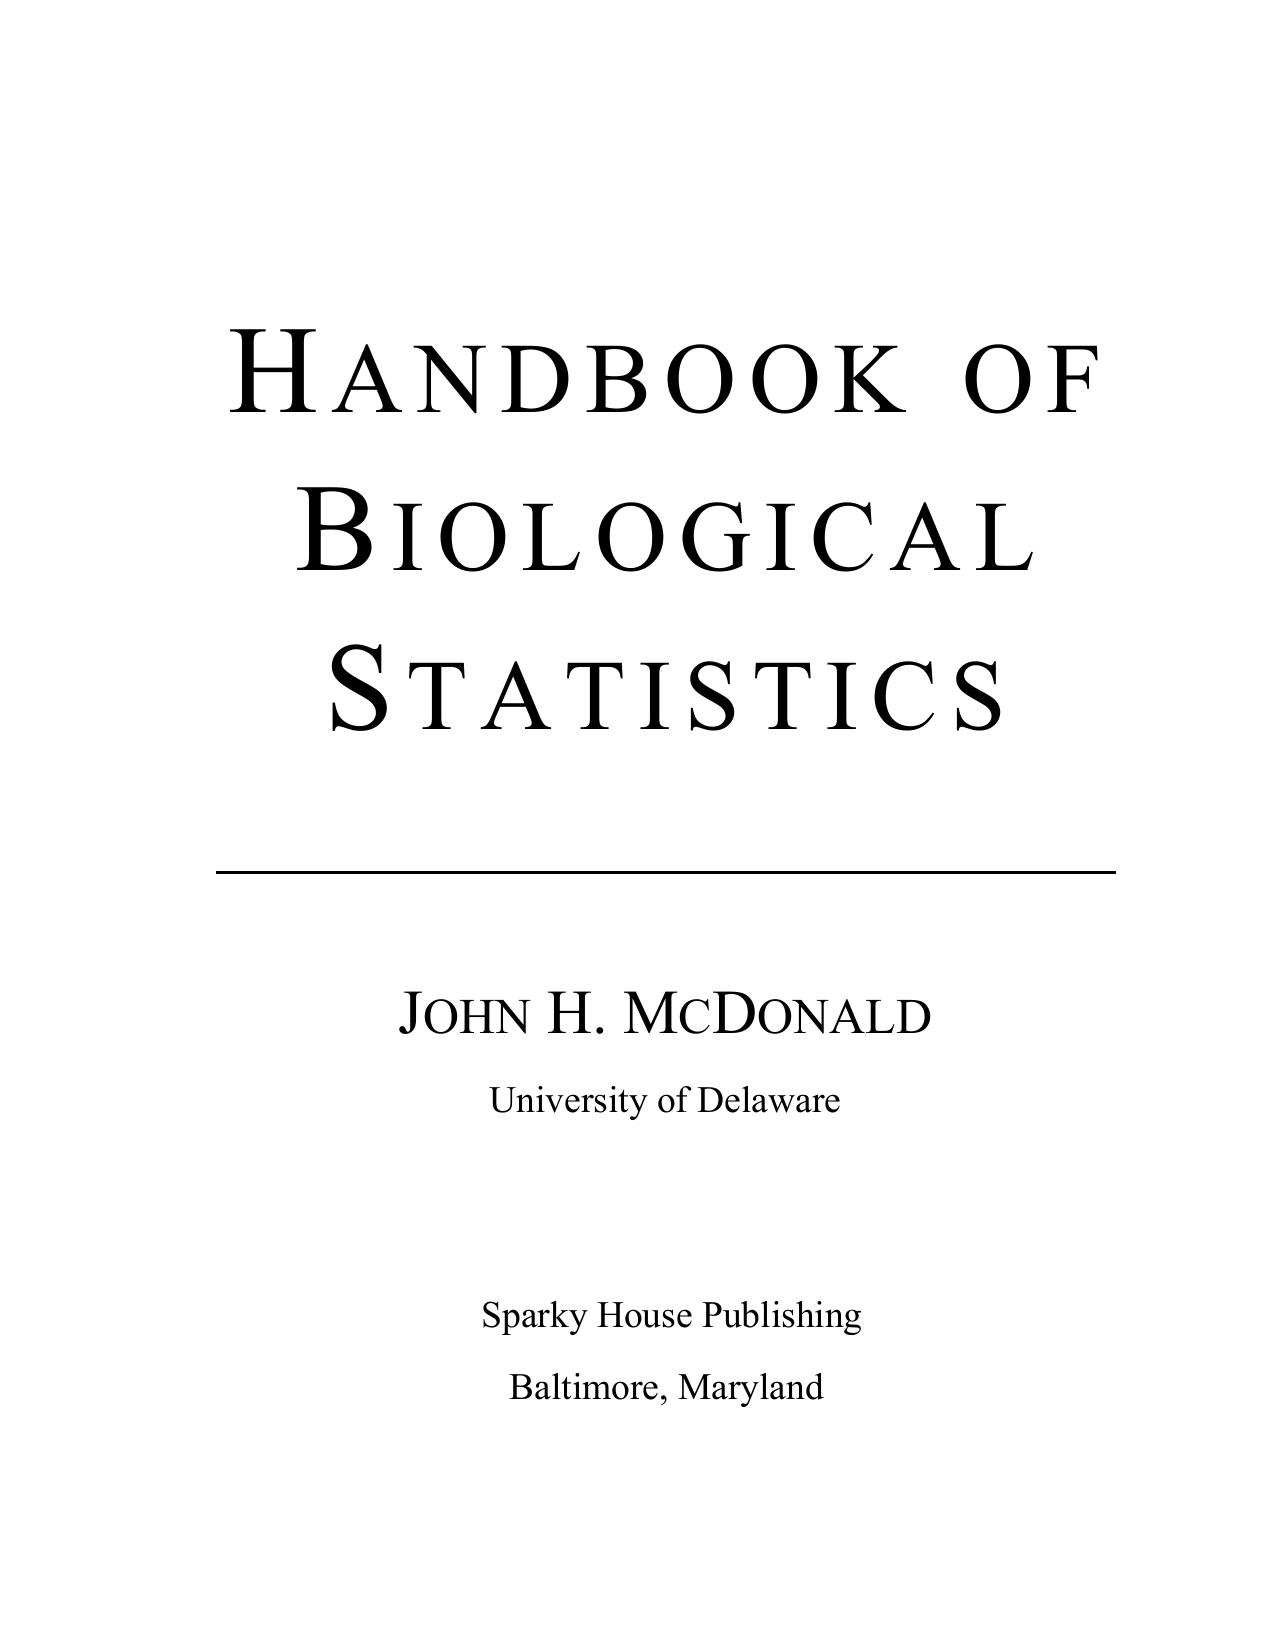 Handbook of Biological Statistics 2008